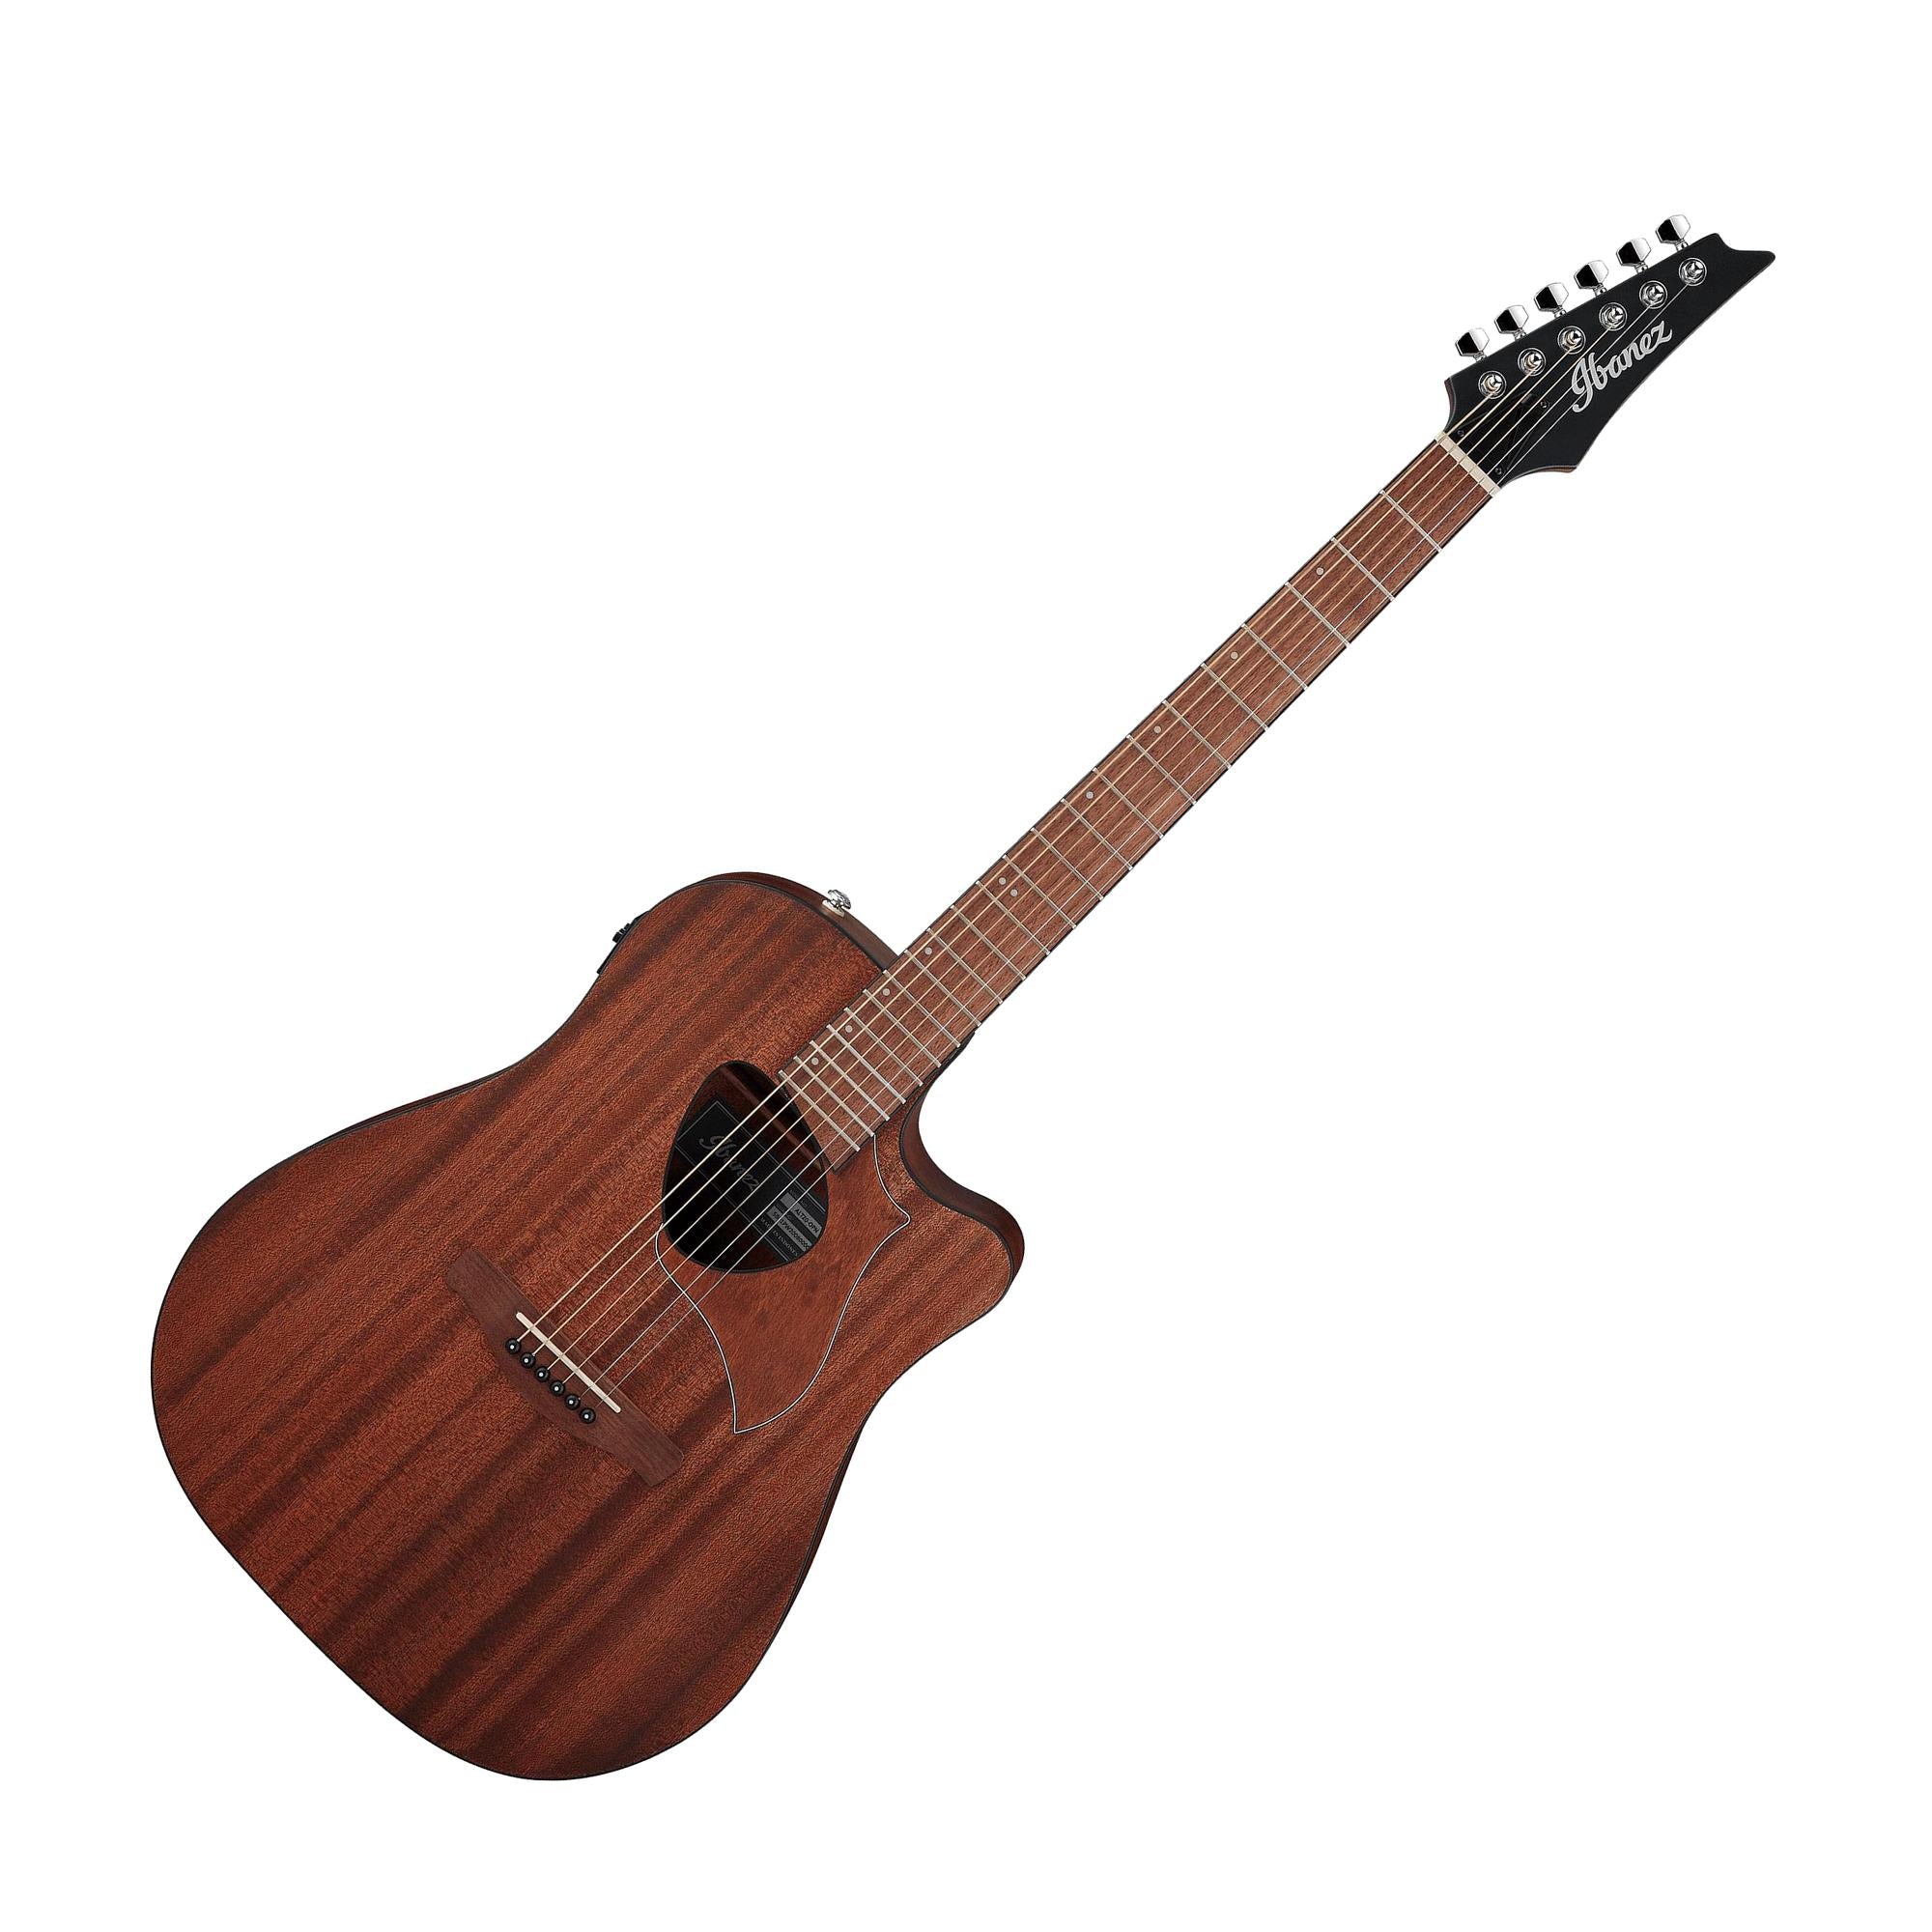 Ibanez ALT20OPN Altstar Series Acoustic Electric Guitar, Open Pore Natural